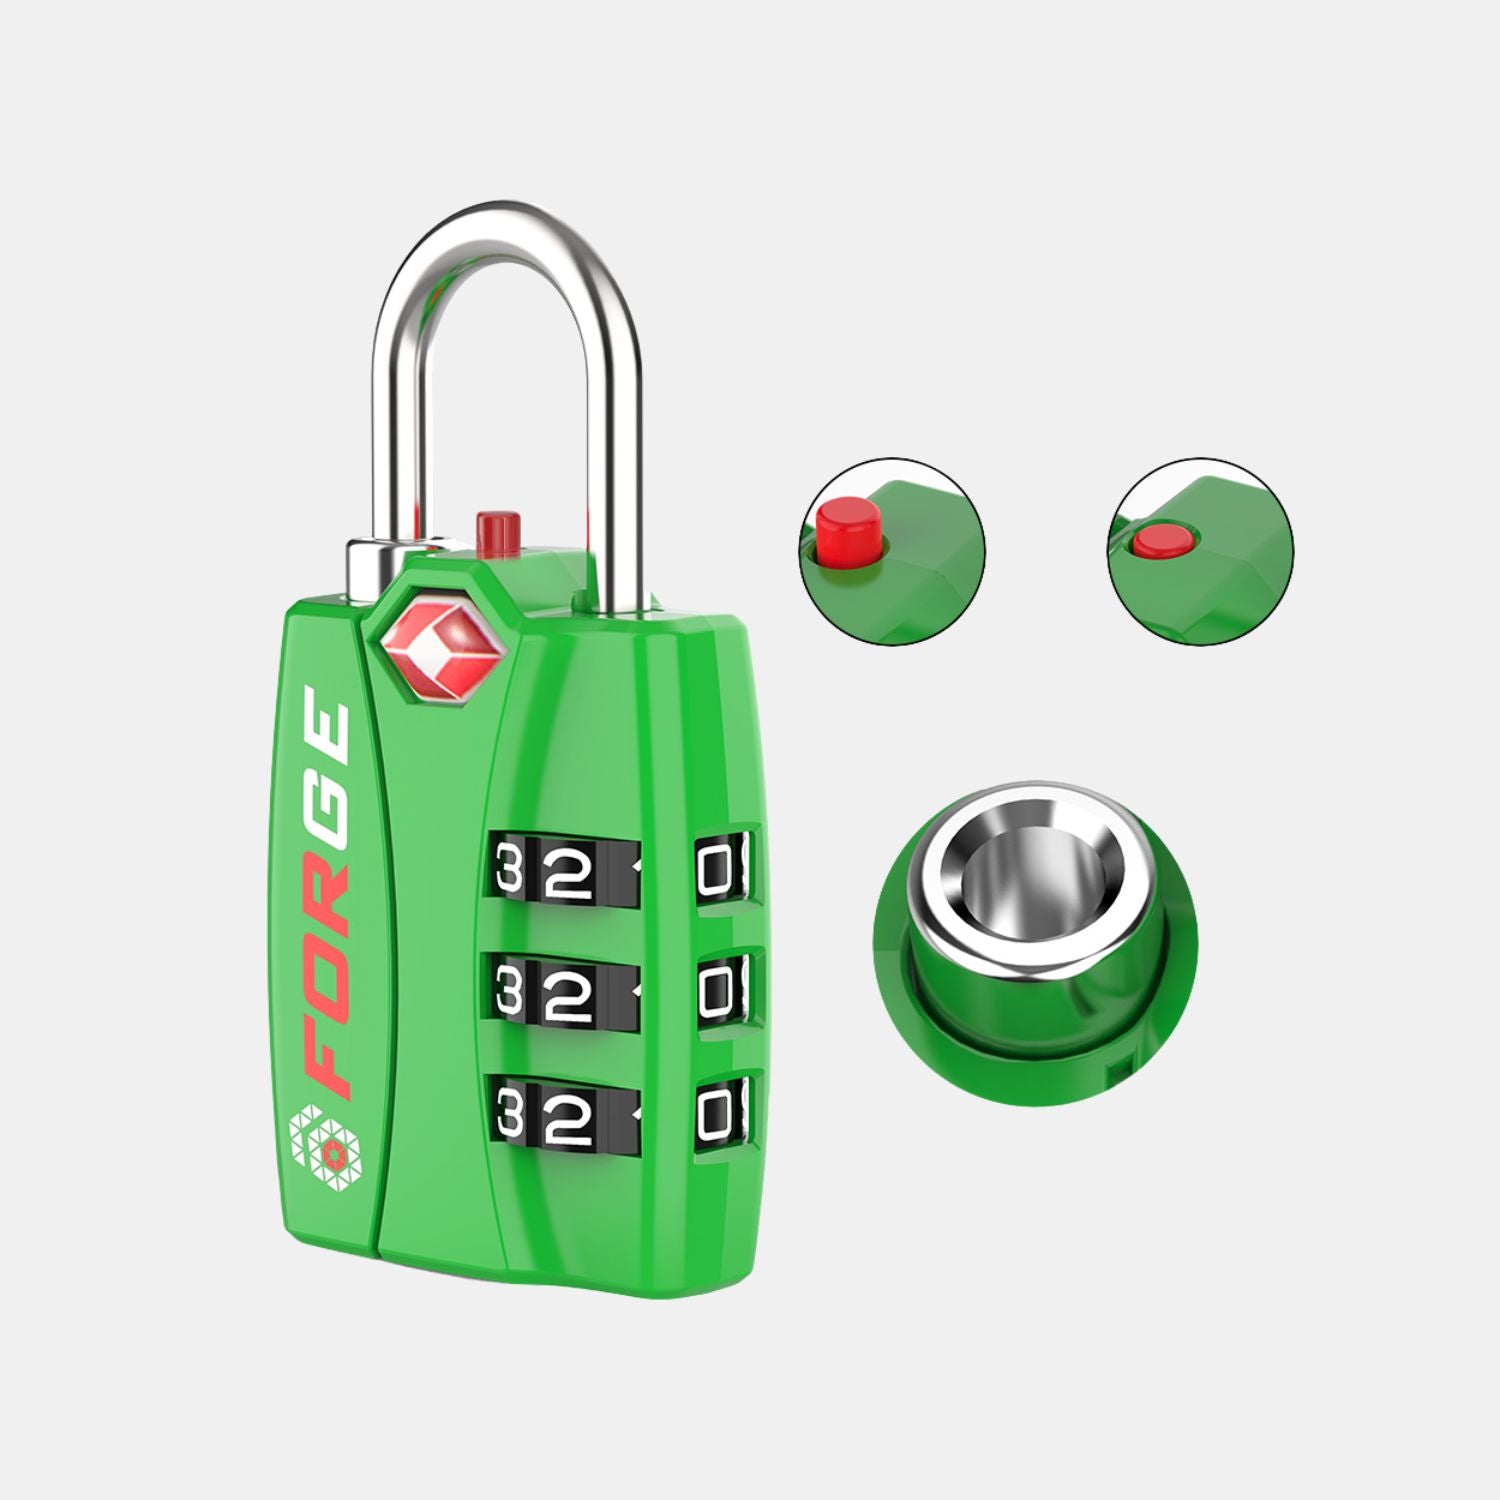 TSA-Approved Luggage Locks: 3-Digit Combination, Open Alert Indicator, Green 2 Locks